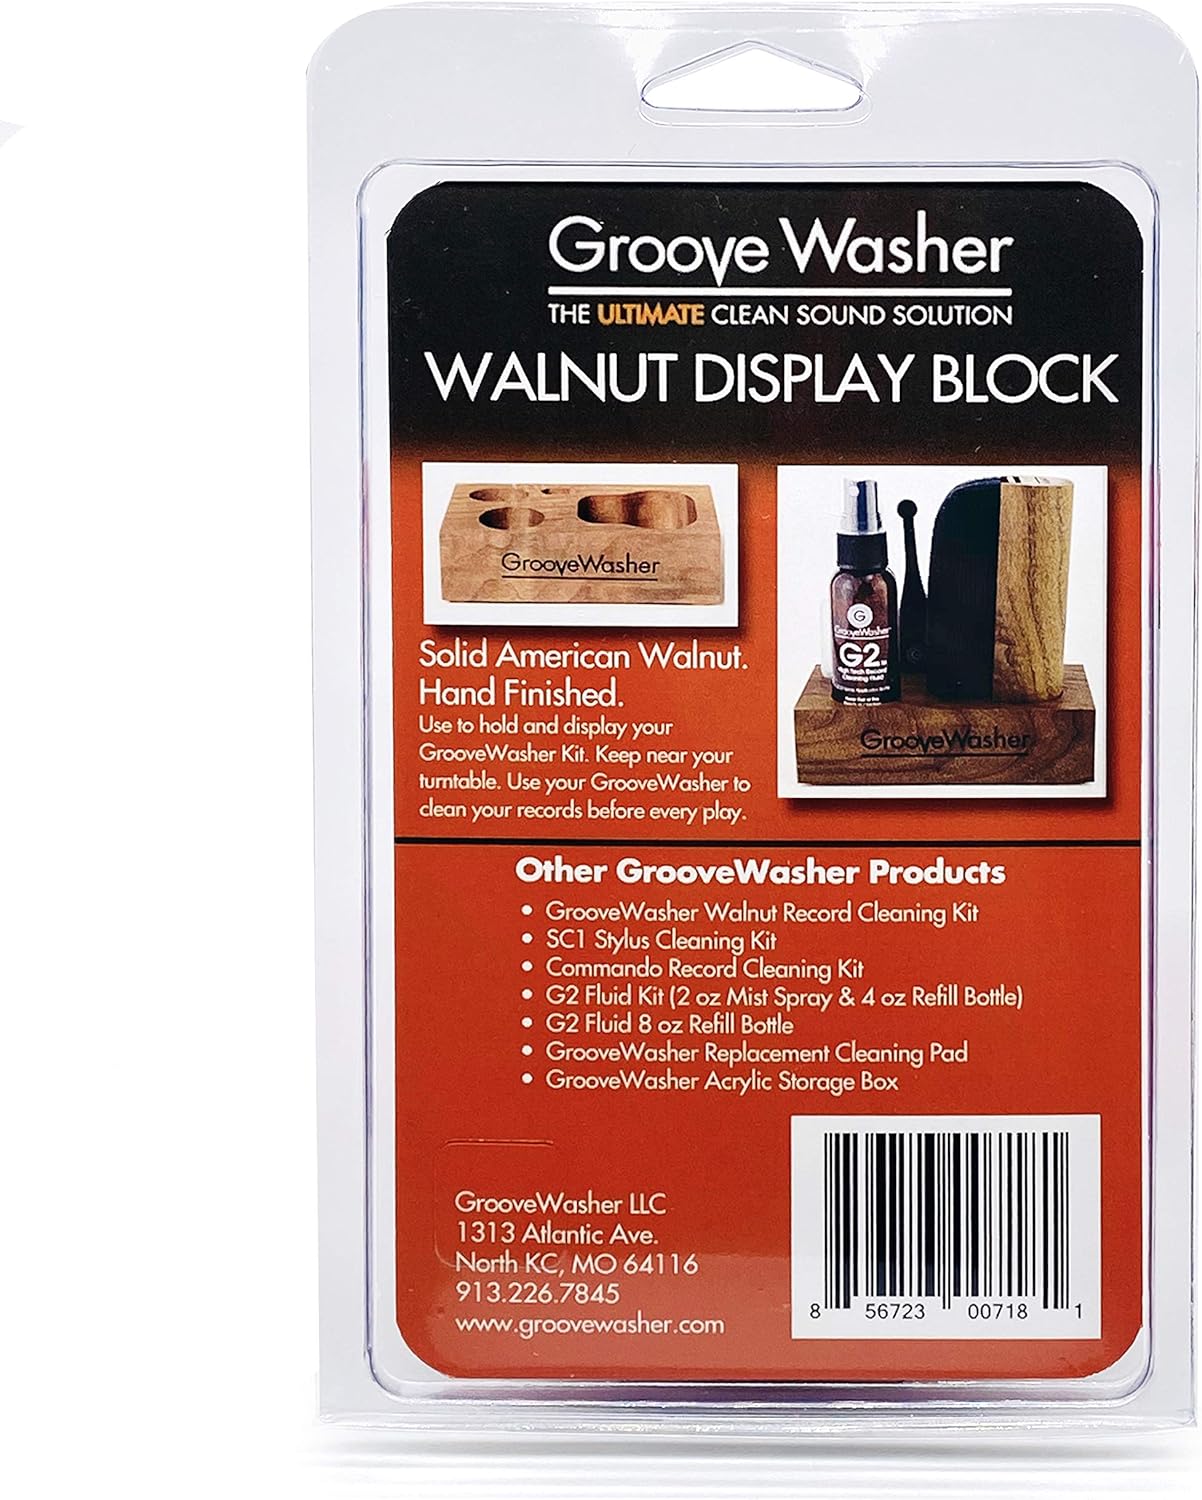 Walnut Display Block + 2 oz G2 Fluid Bottle